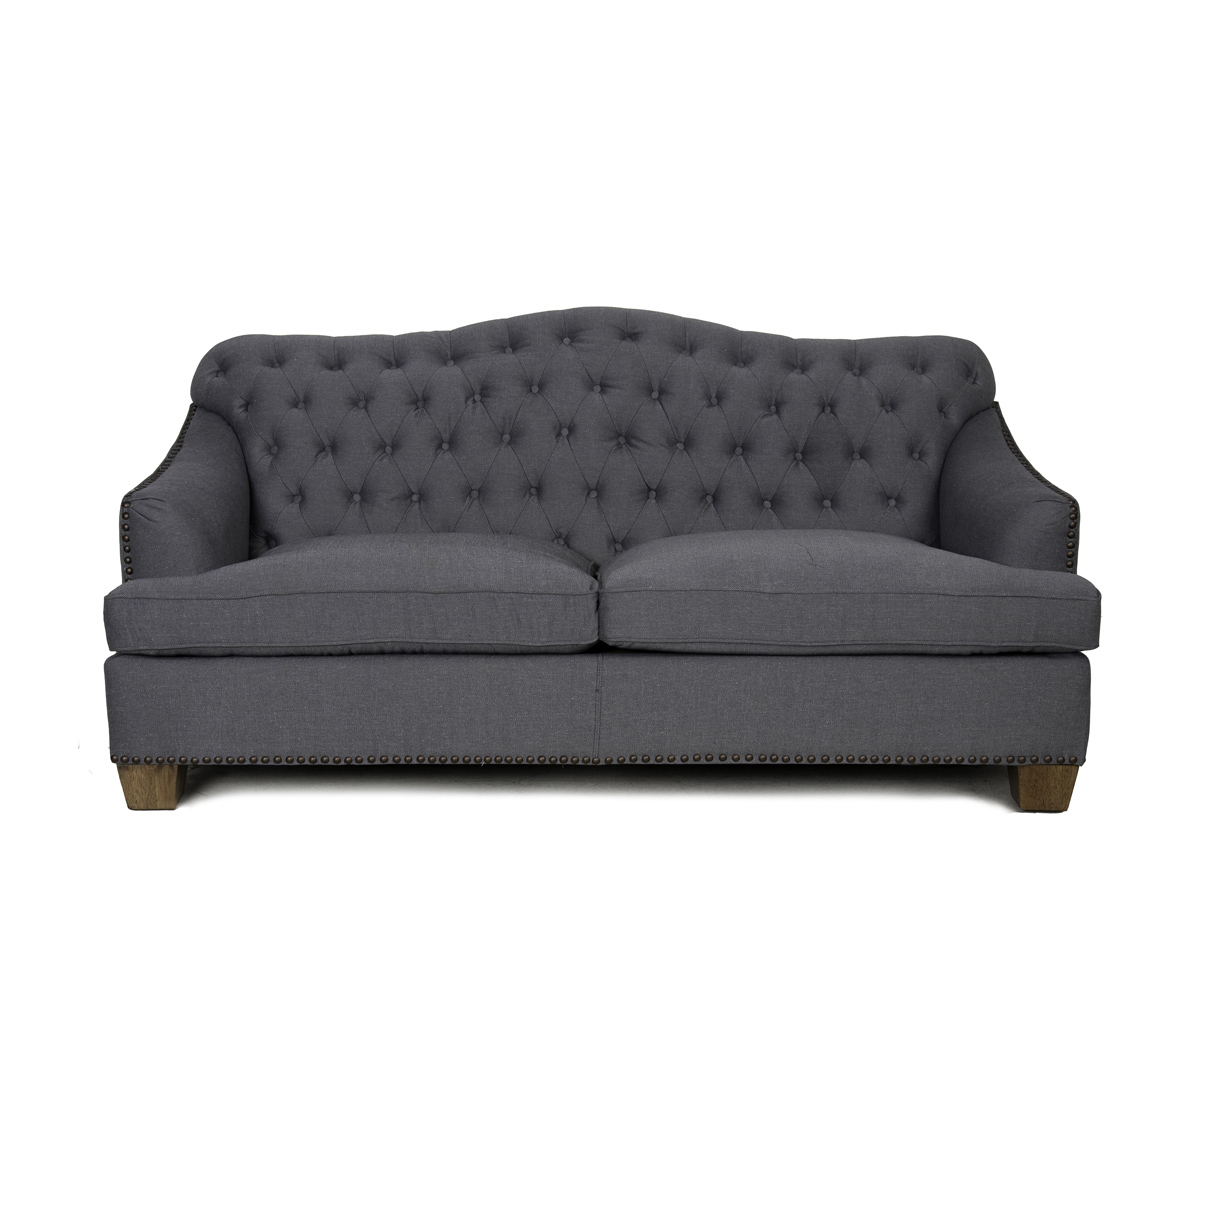 Bardot Tufted Sofa With Nailheads – Charcoal | Charcoal Sofa, Kosas With Light Charcoal Linen Sofas (View 16 of 20)